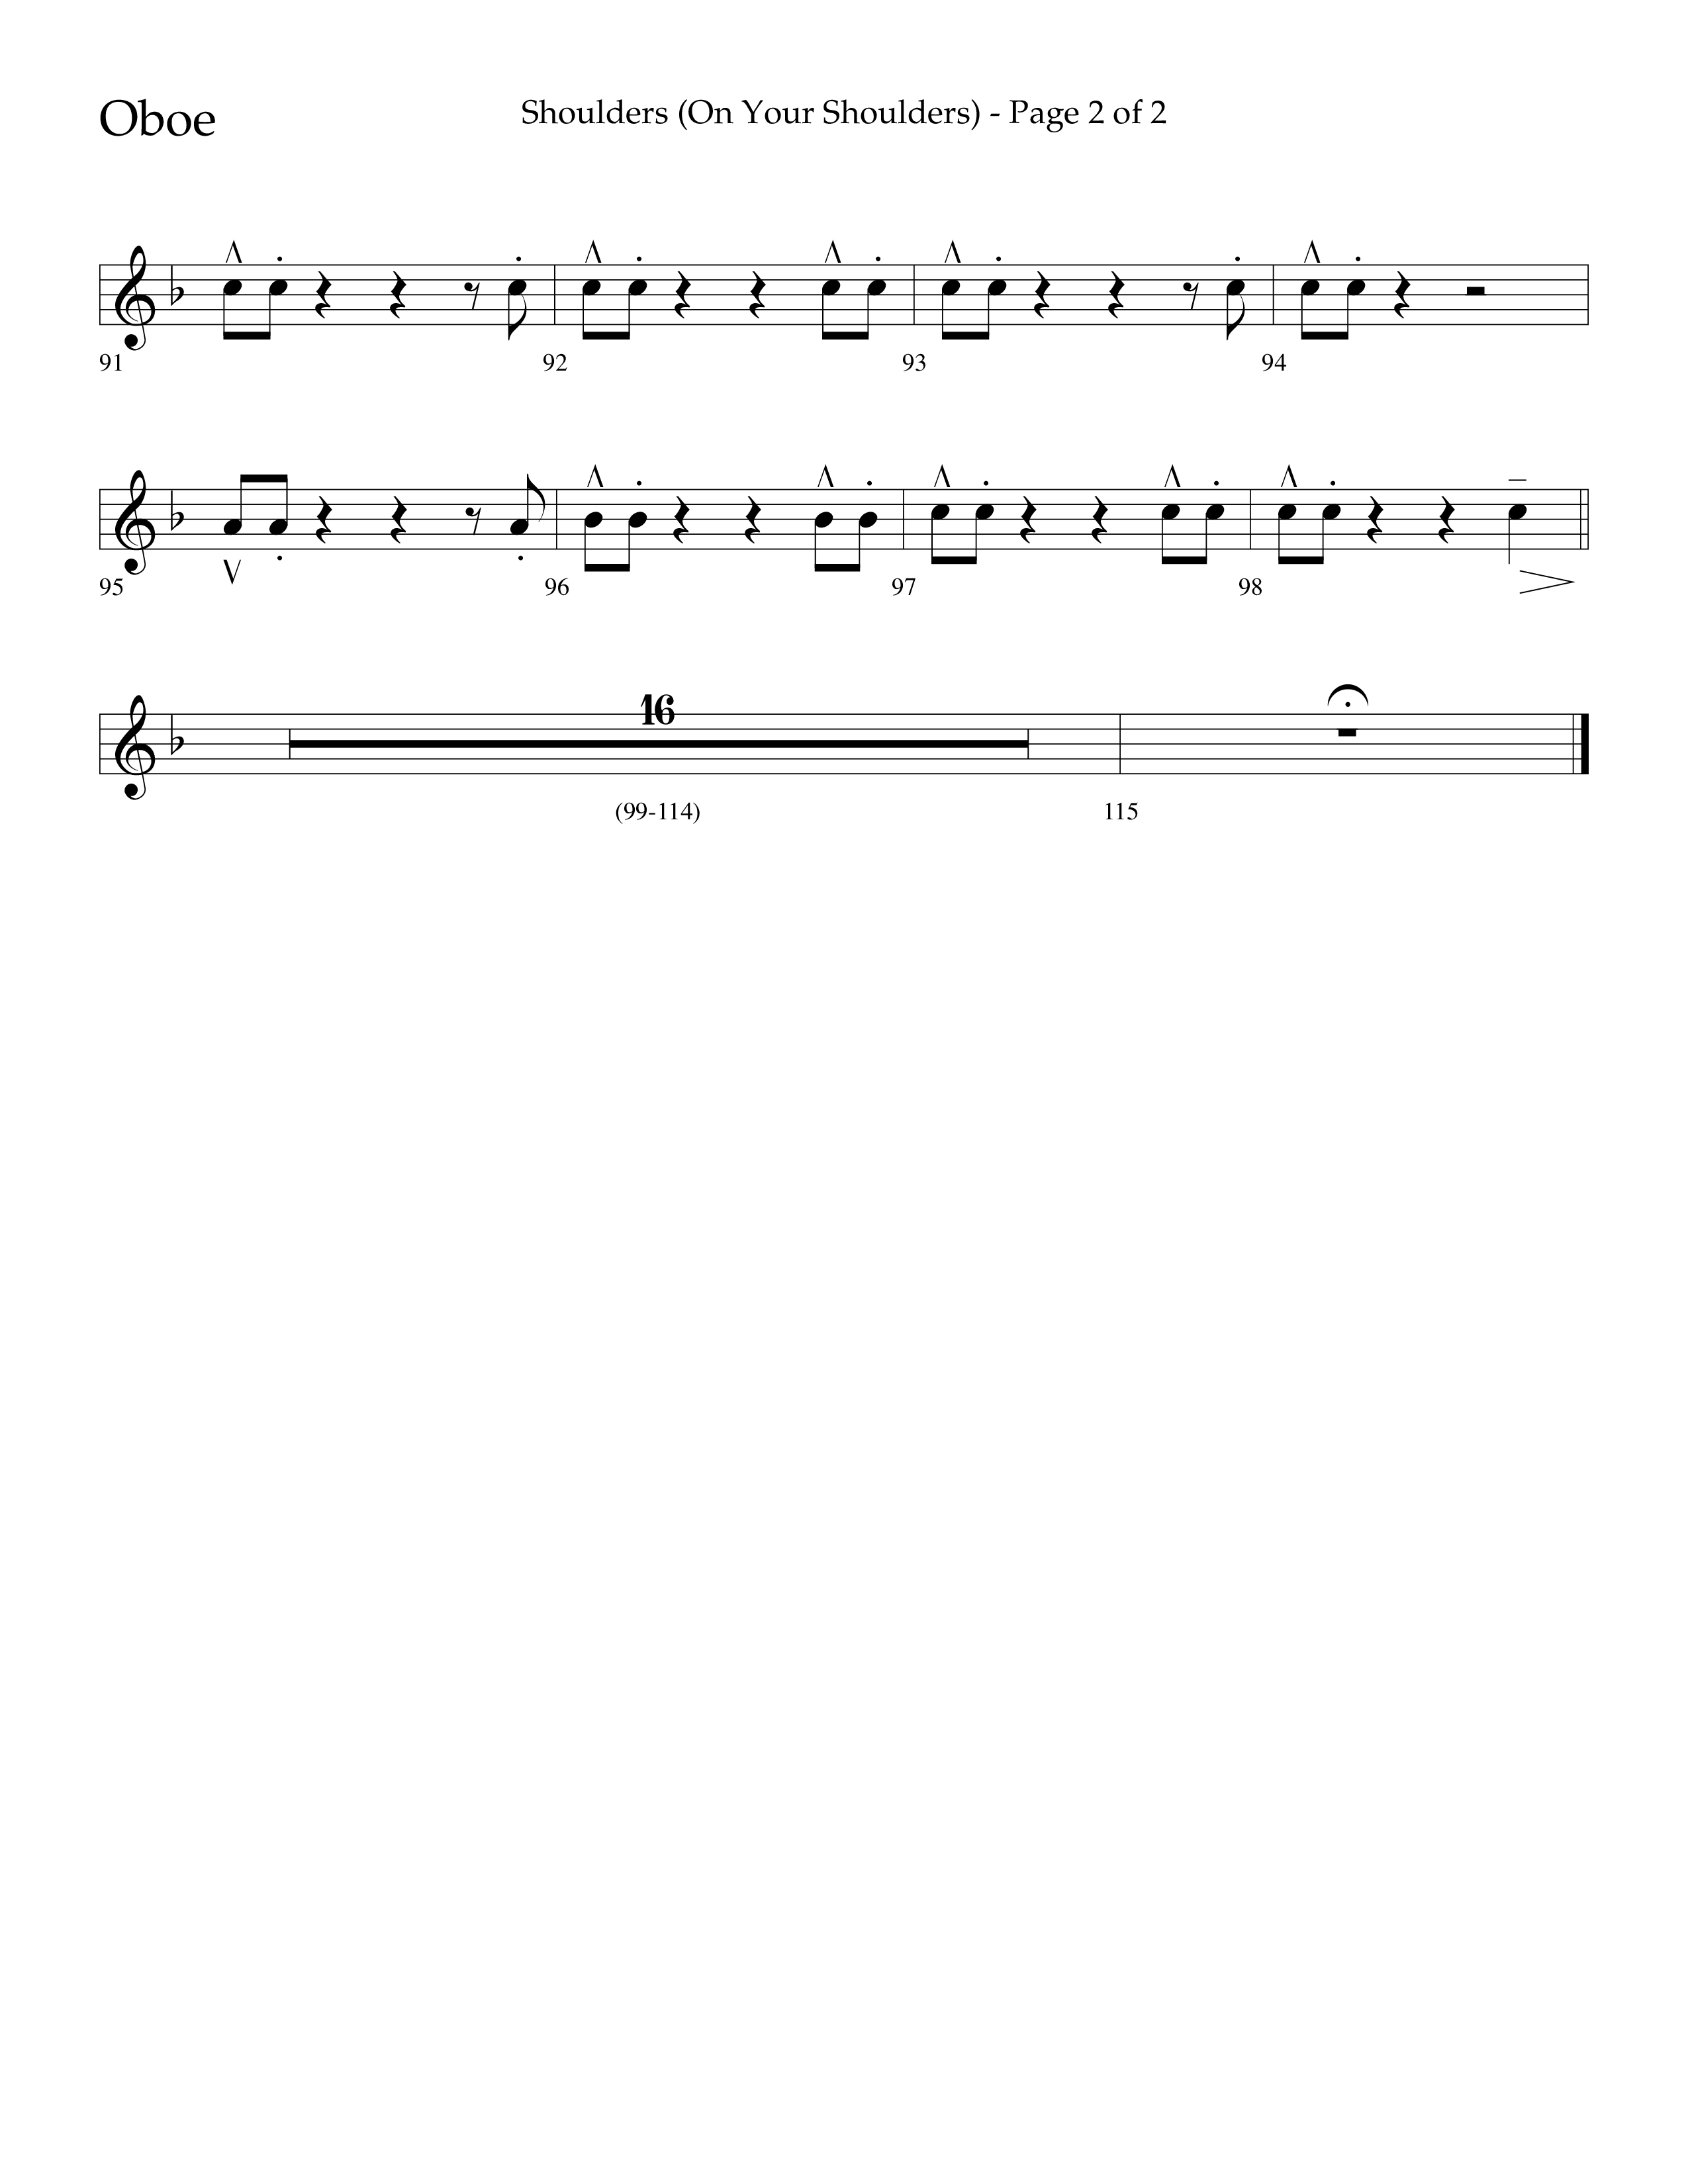 Shoulders (Choral Anthem SATB) Oboe (Lifeway Choral / Arr. Cliff Duren)